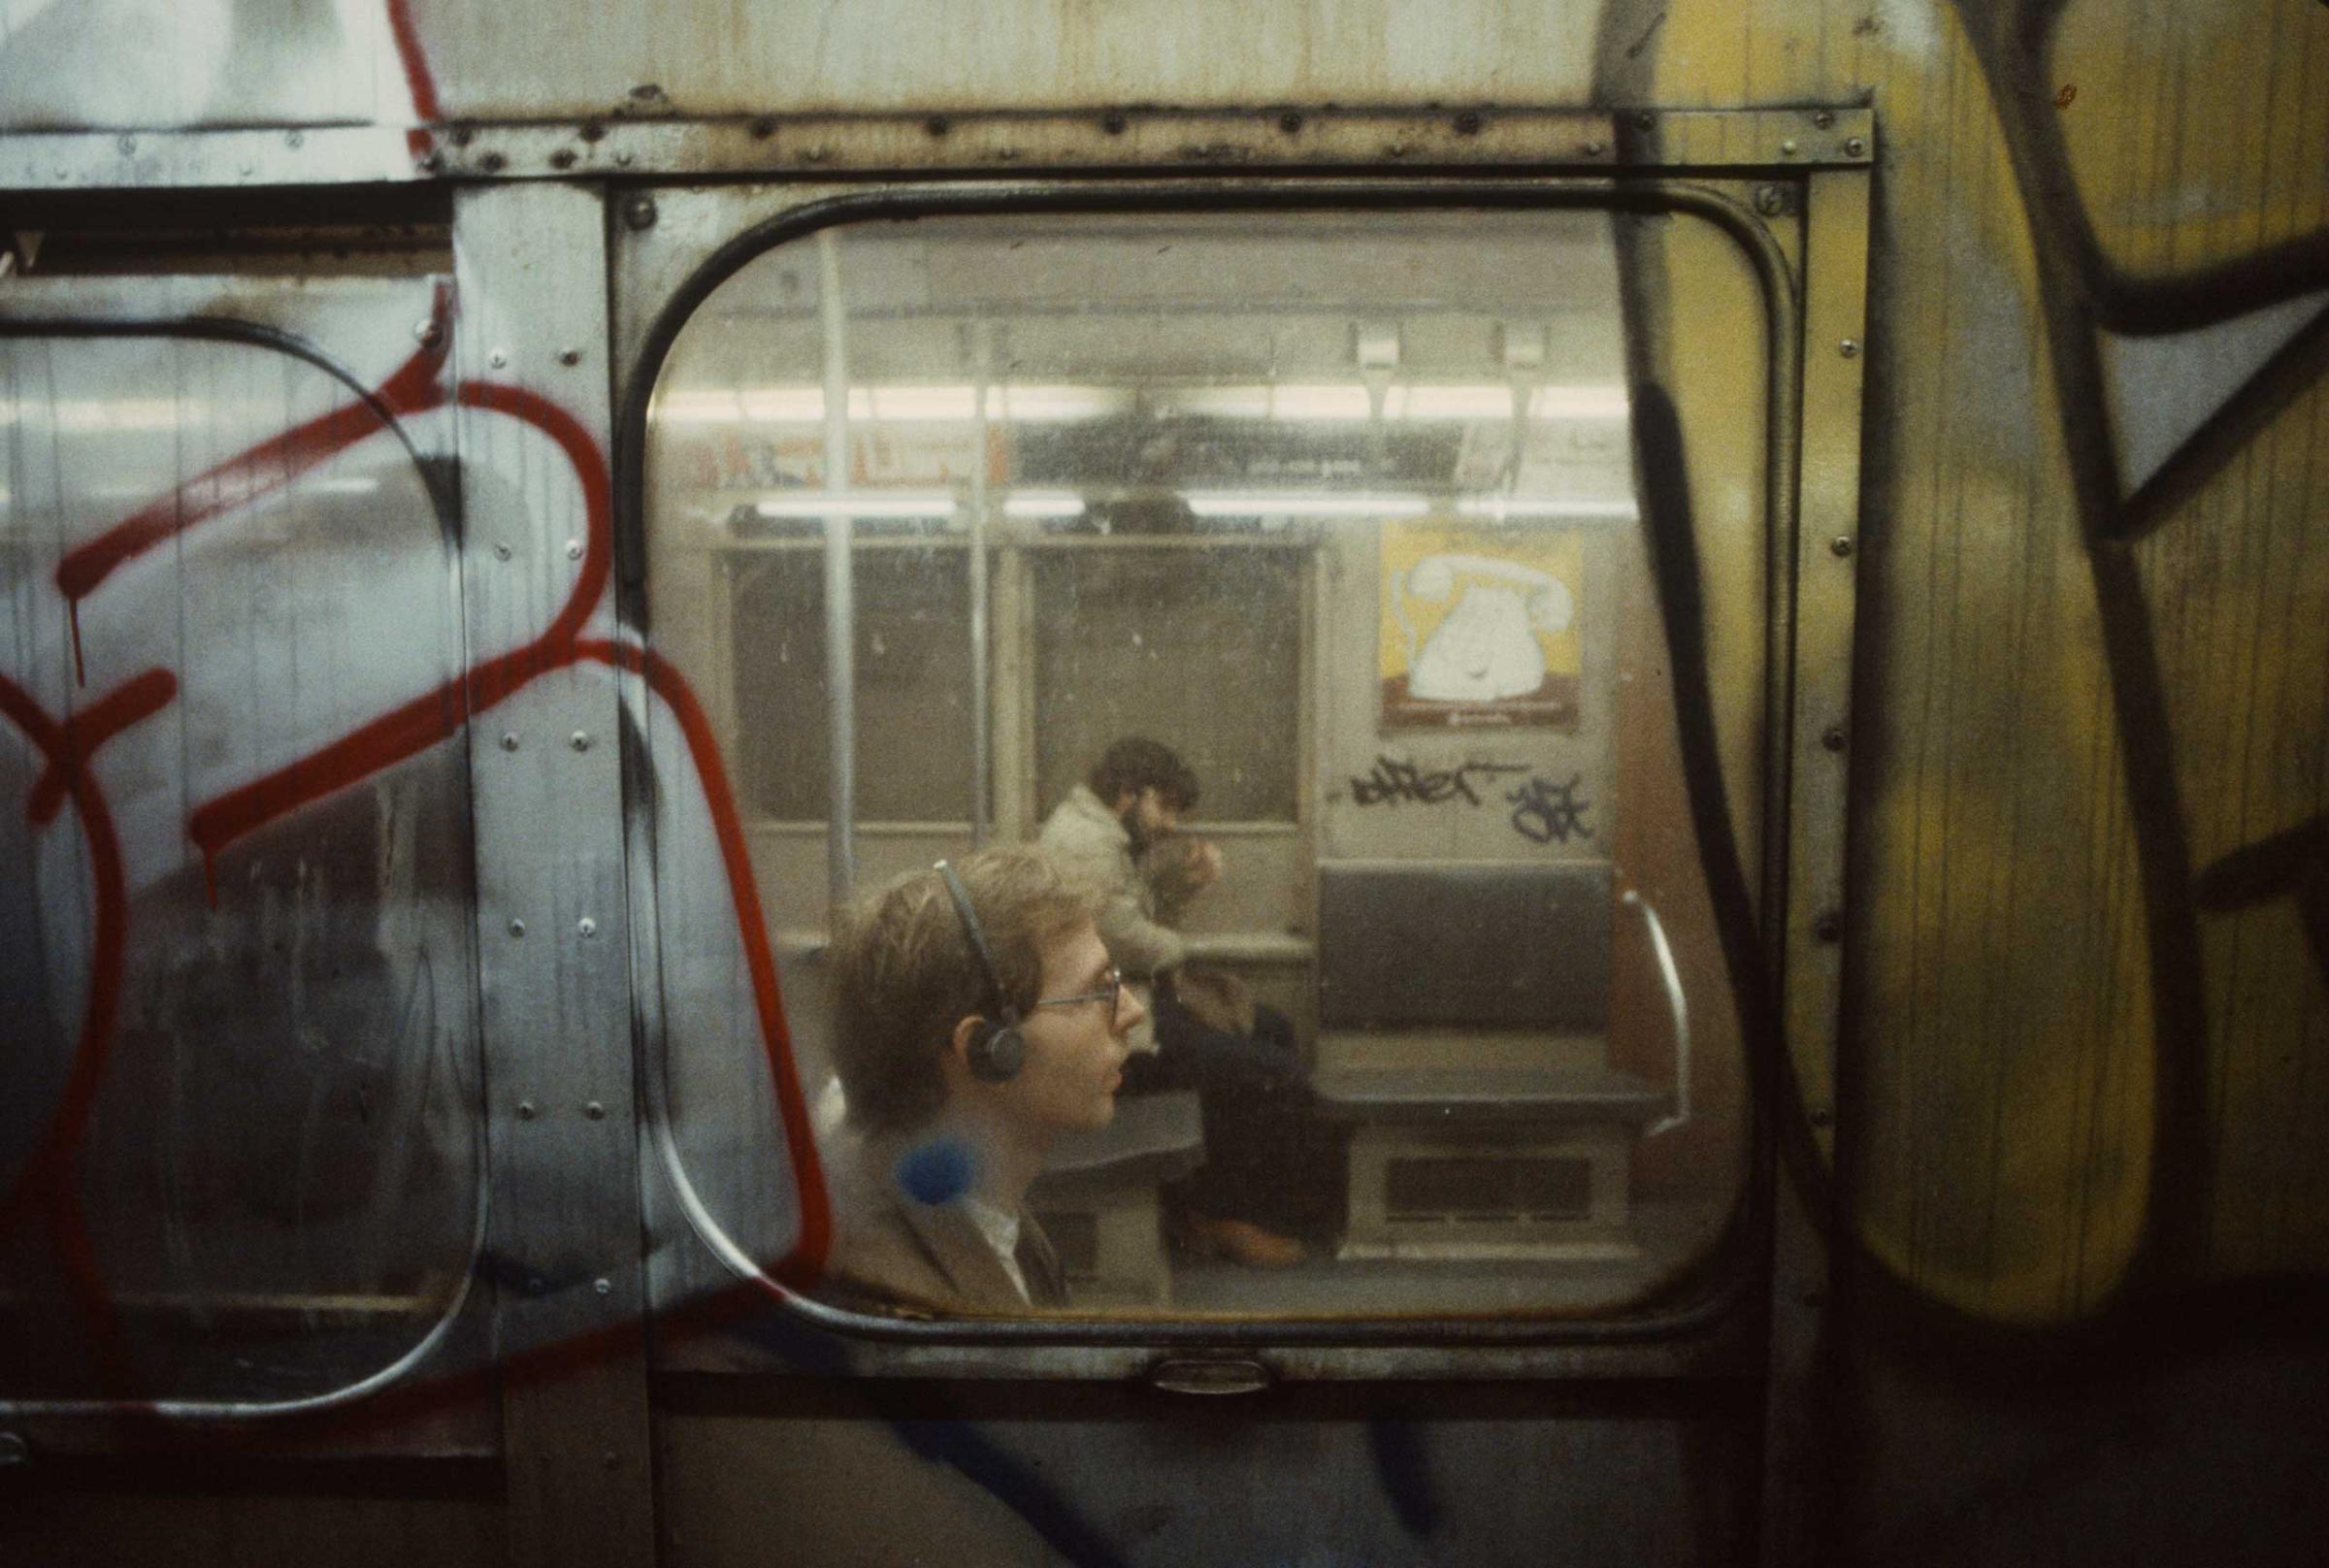 A man is seen wearing headphones through a subway car window, 1981.